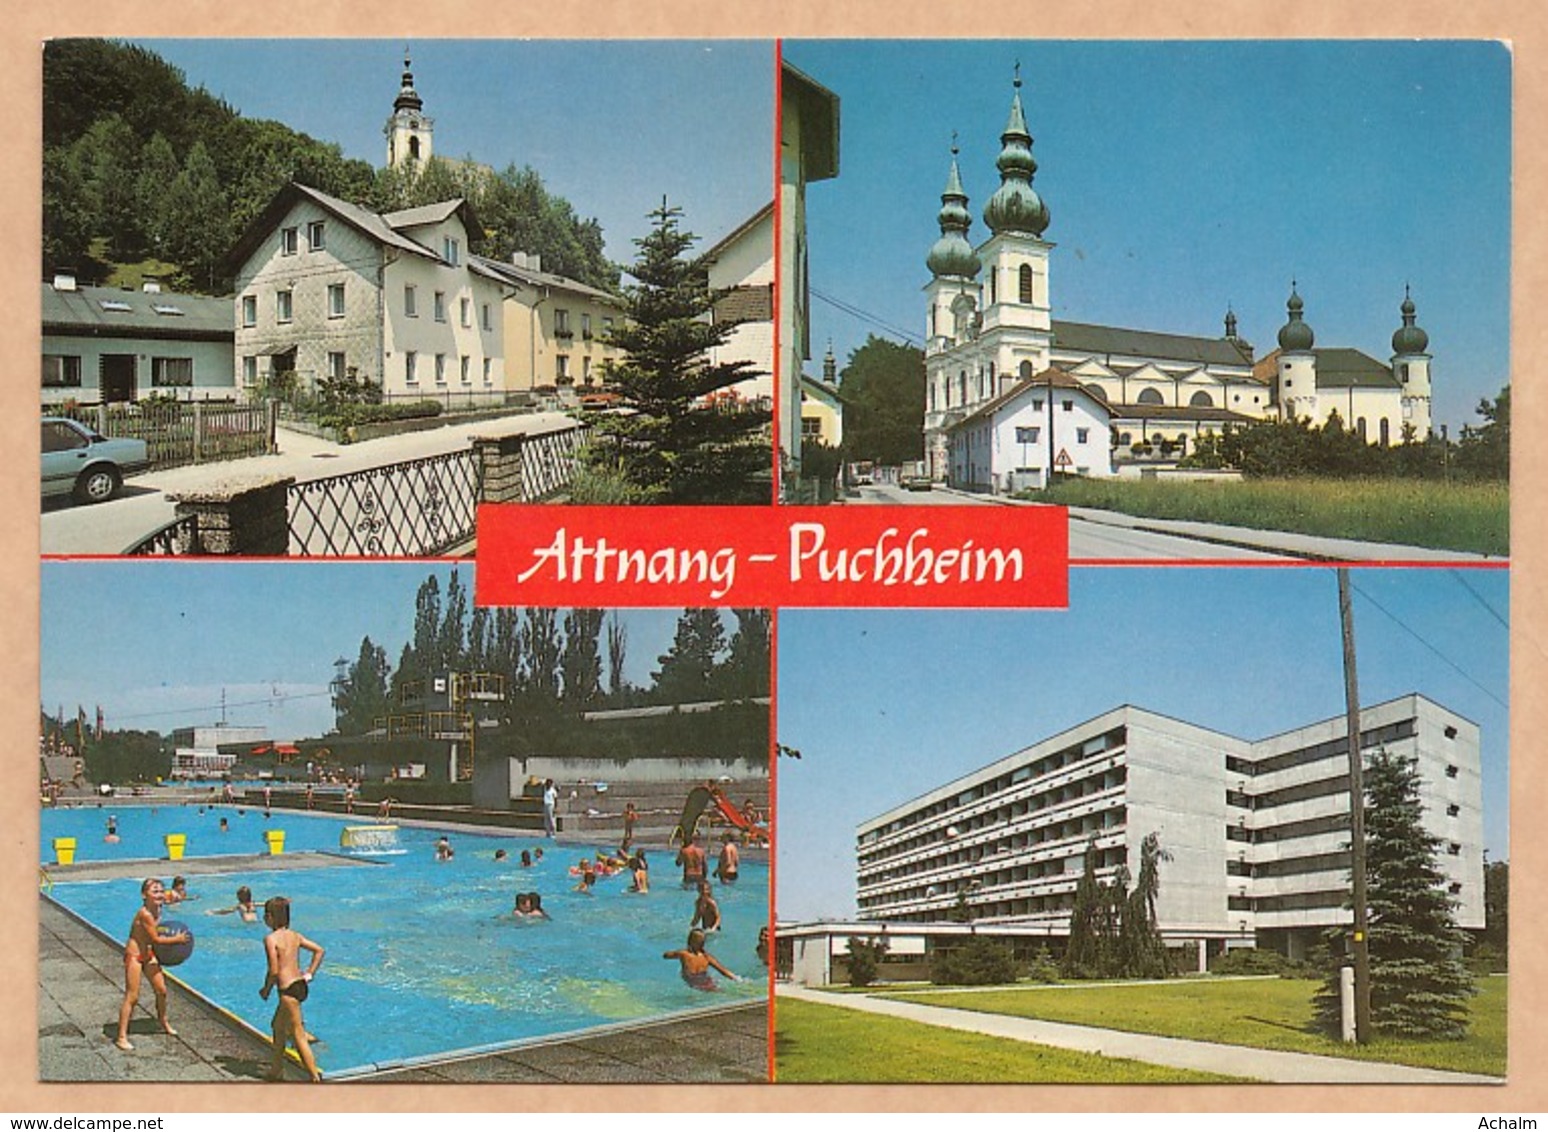 Attnang-Puchheim - Martinskirche, Schloss Puchheim, Schwimmbad, Alters- Und Pflegeheim - Attnang-Pucheim